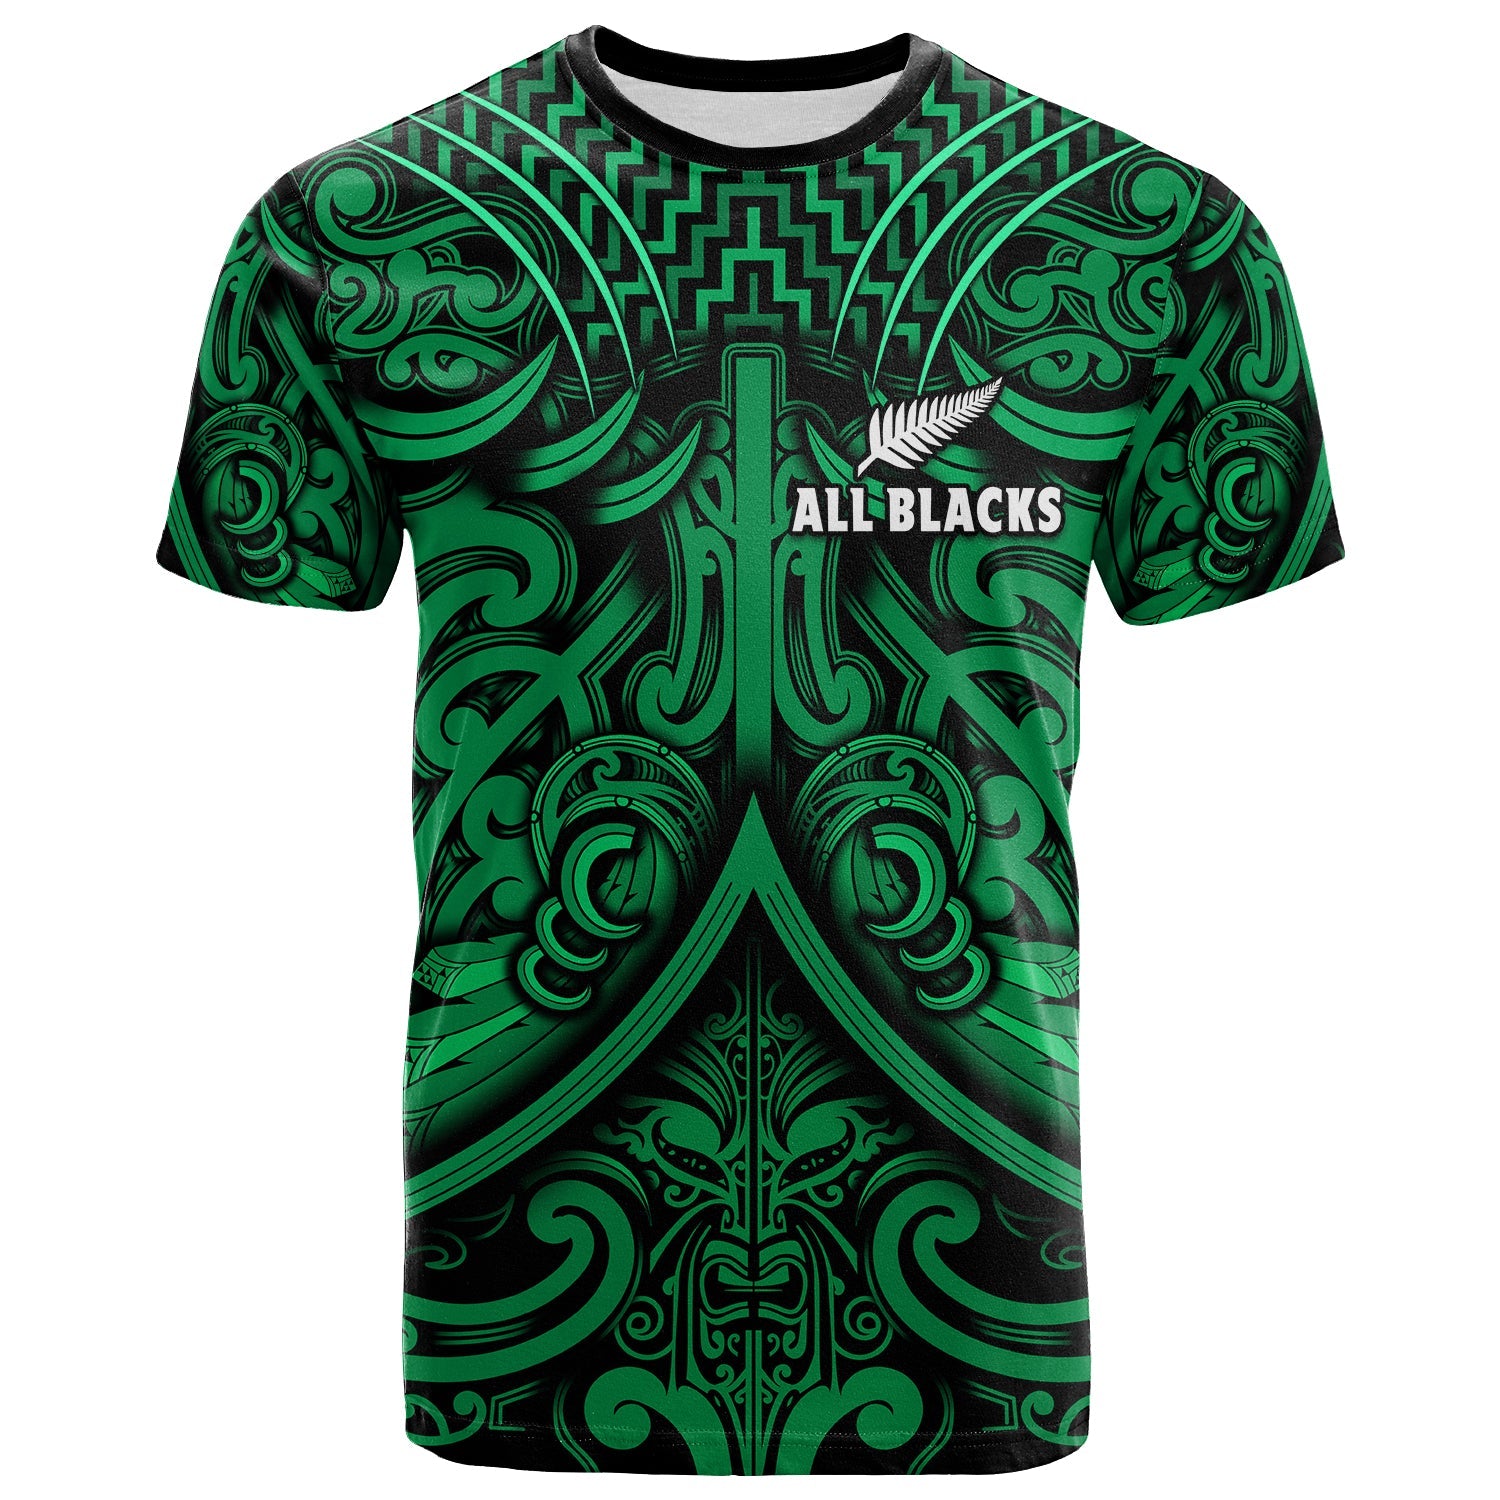 (Custom Text and Number) New Zealand Silver Fern Rugby T Shirt All Black Green NZ Maori Pattern LT13 Green - Polynesian Pride